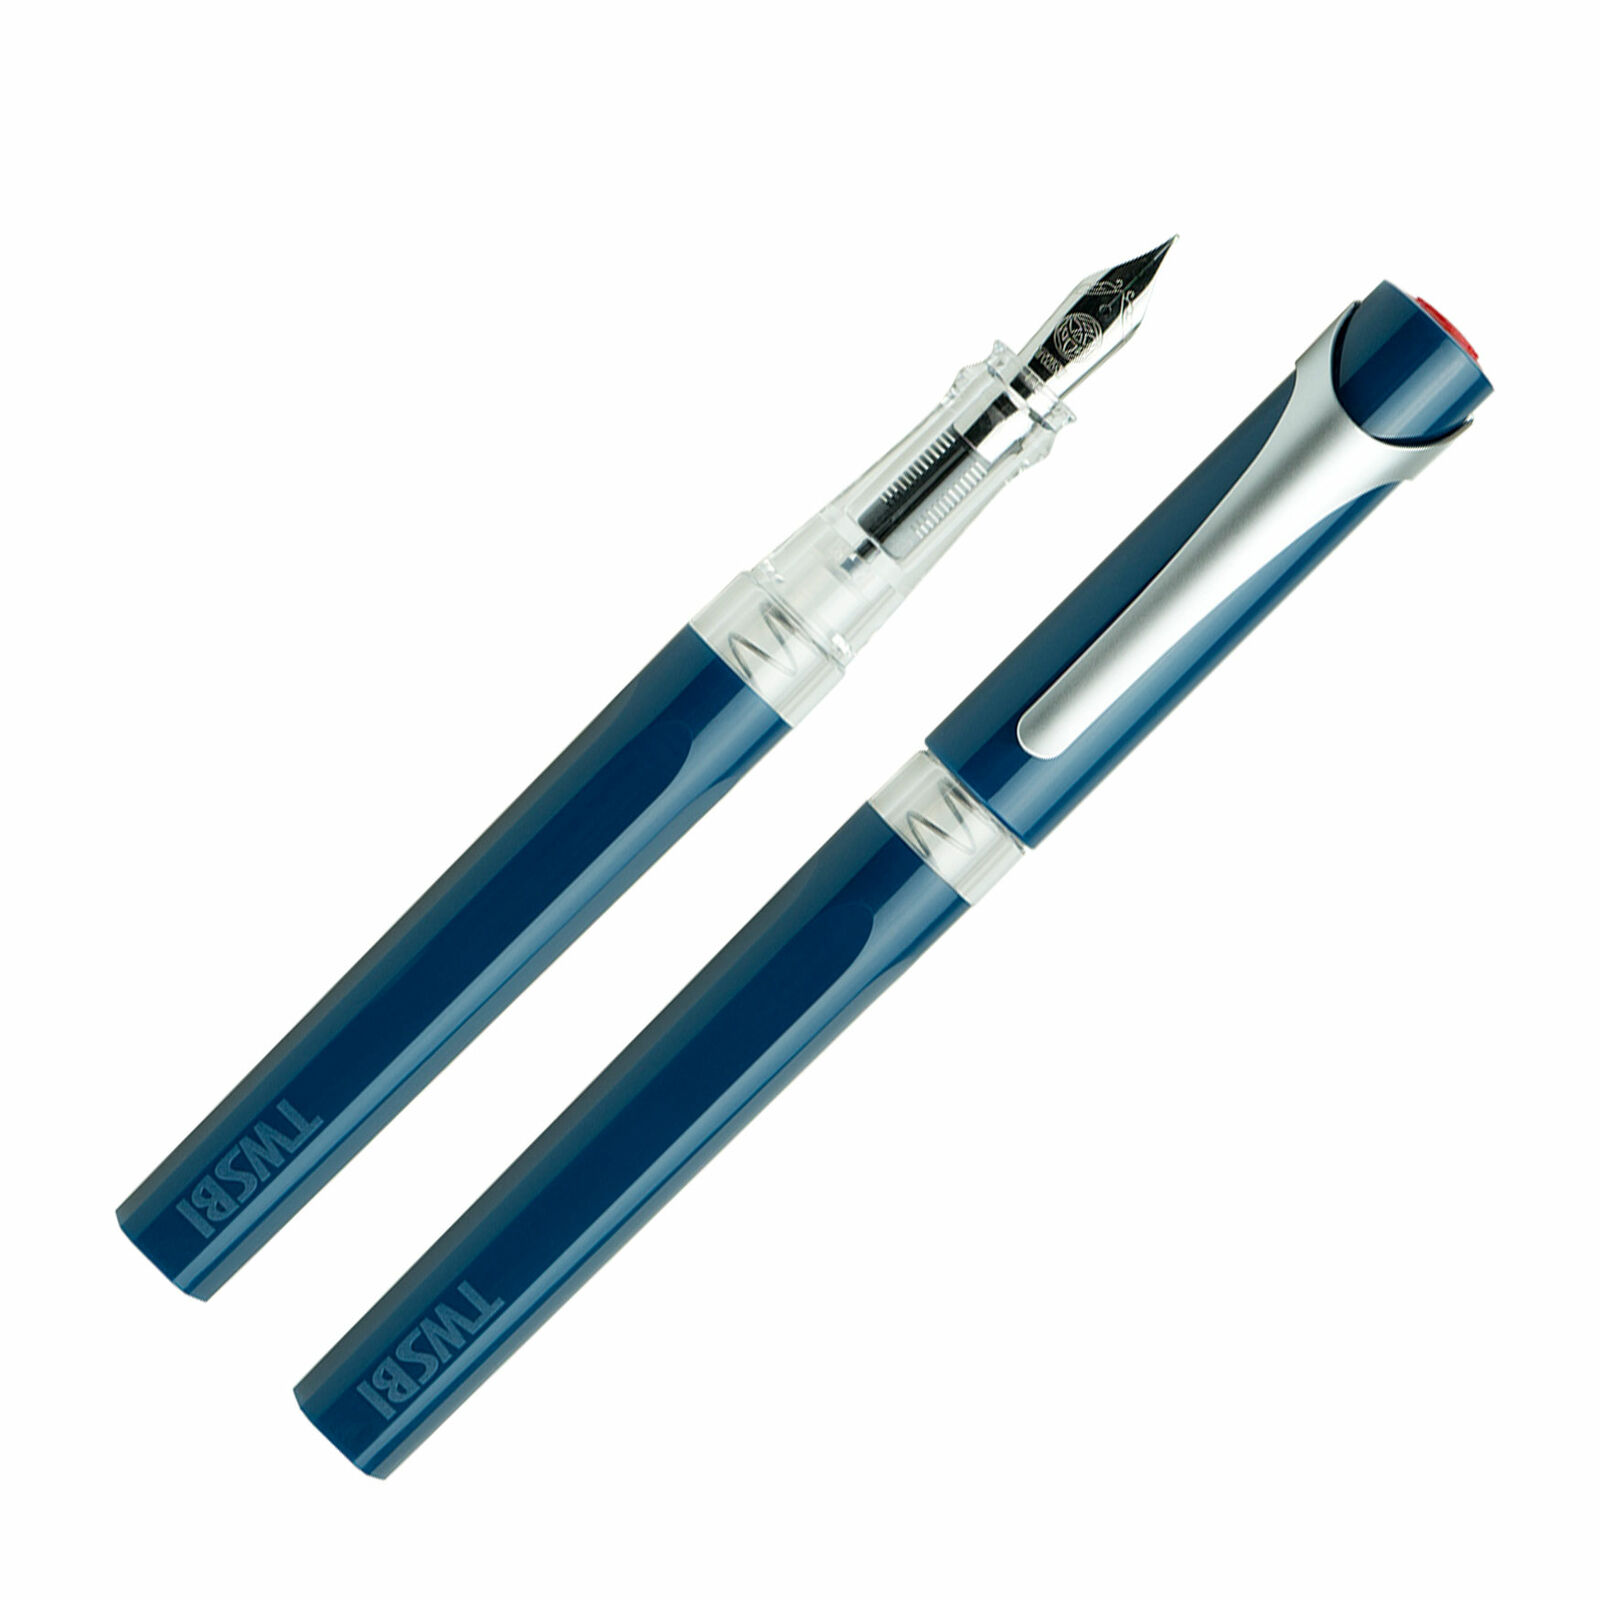 TWSBI Swipe Fountain Pen in Prussian Blue - Medium Point - NEW in Original Box